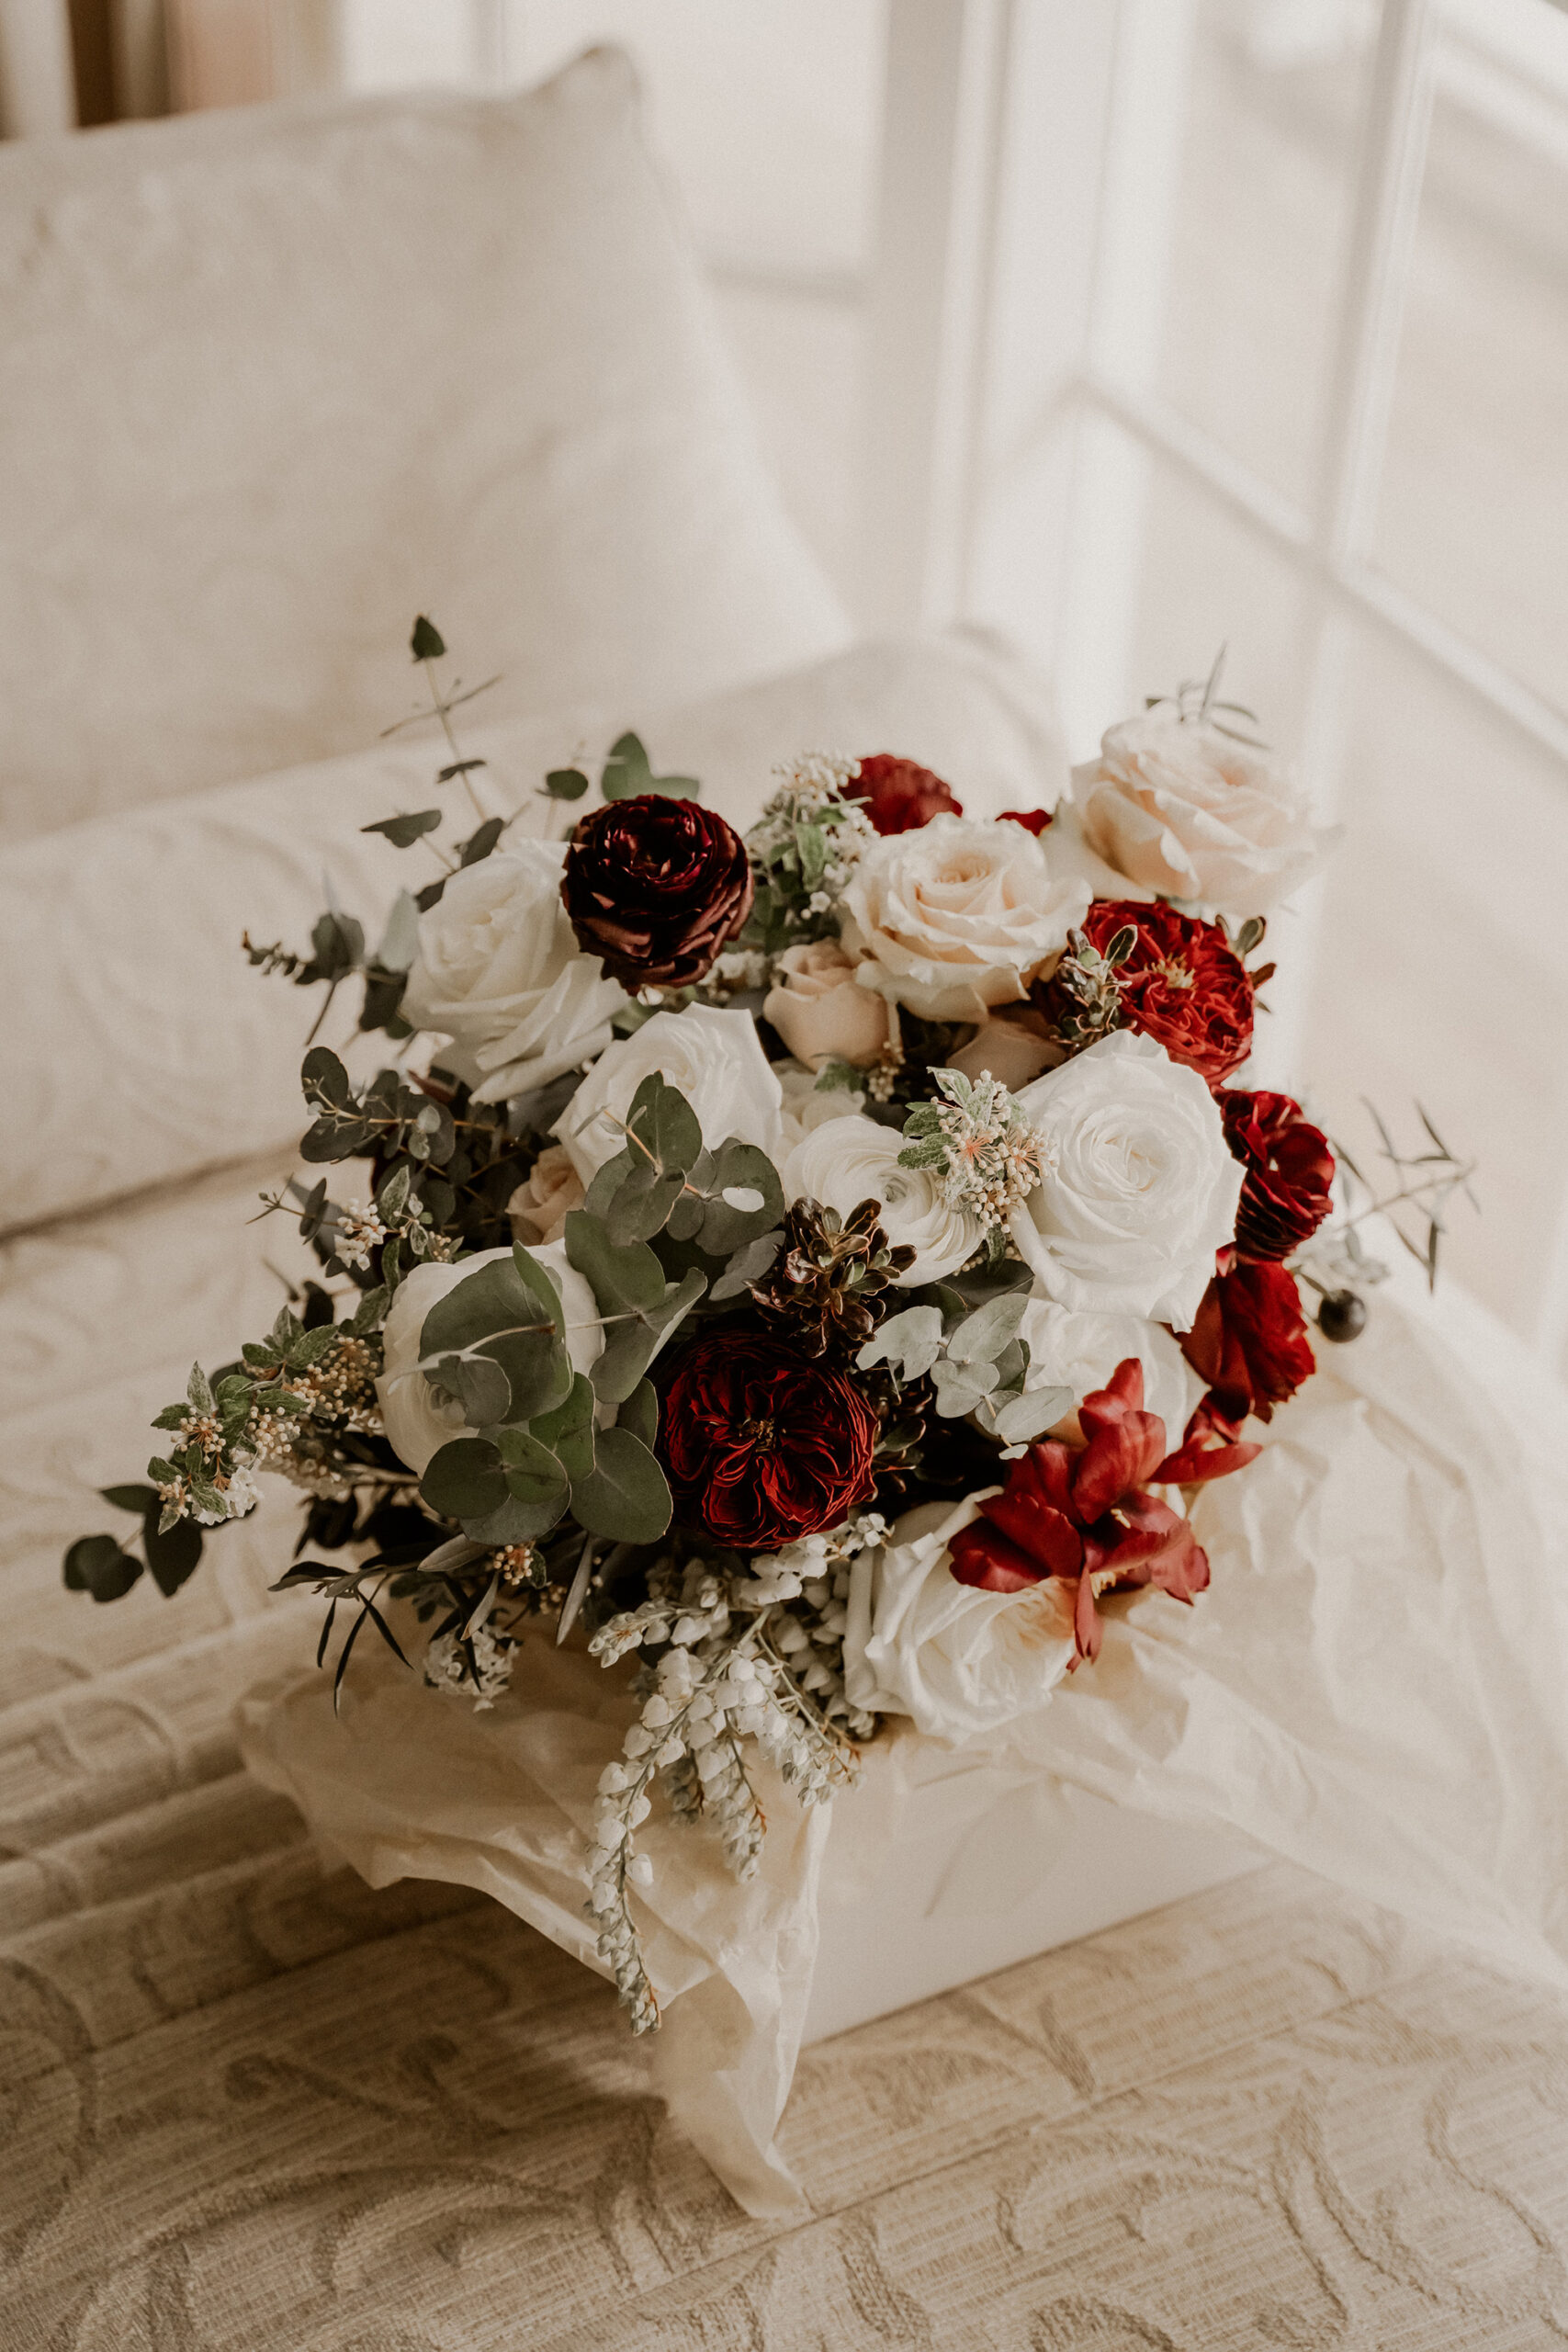 Wedding flowers by I Heart Flowers